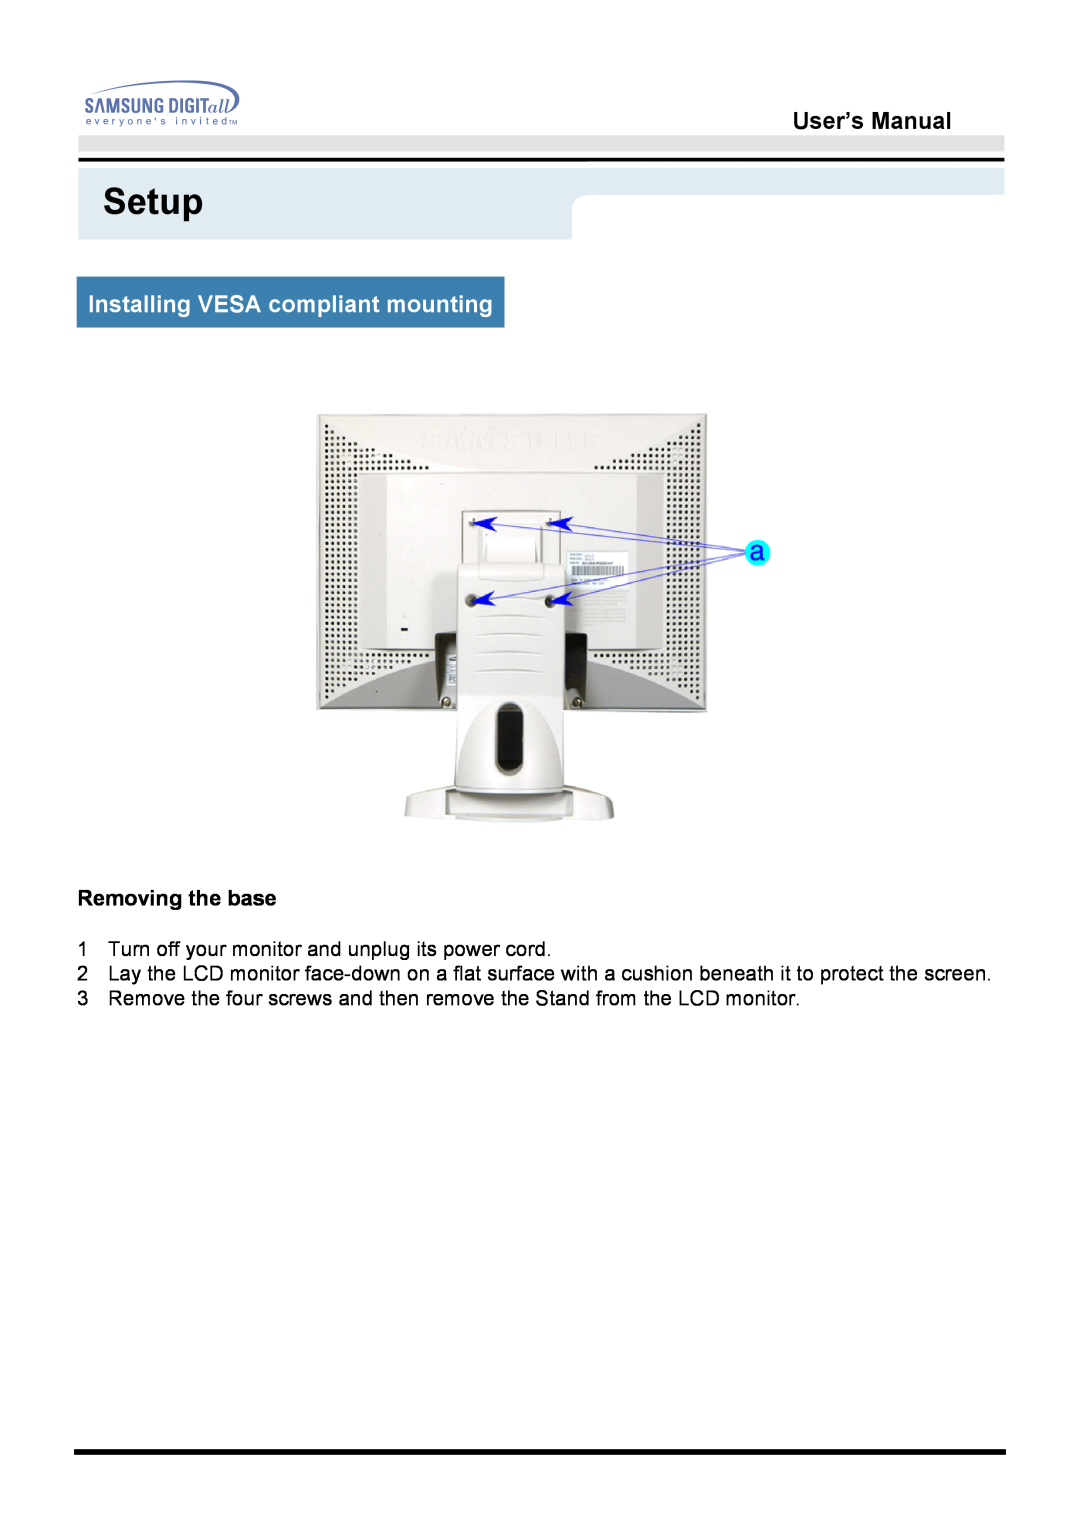 Samsung 151D user manual Installing VESA compliant mounting, Setup, User’s Manual, Removing the base 